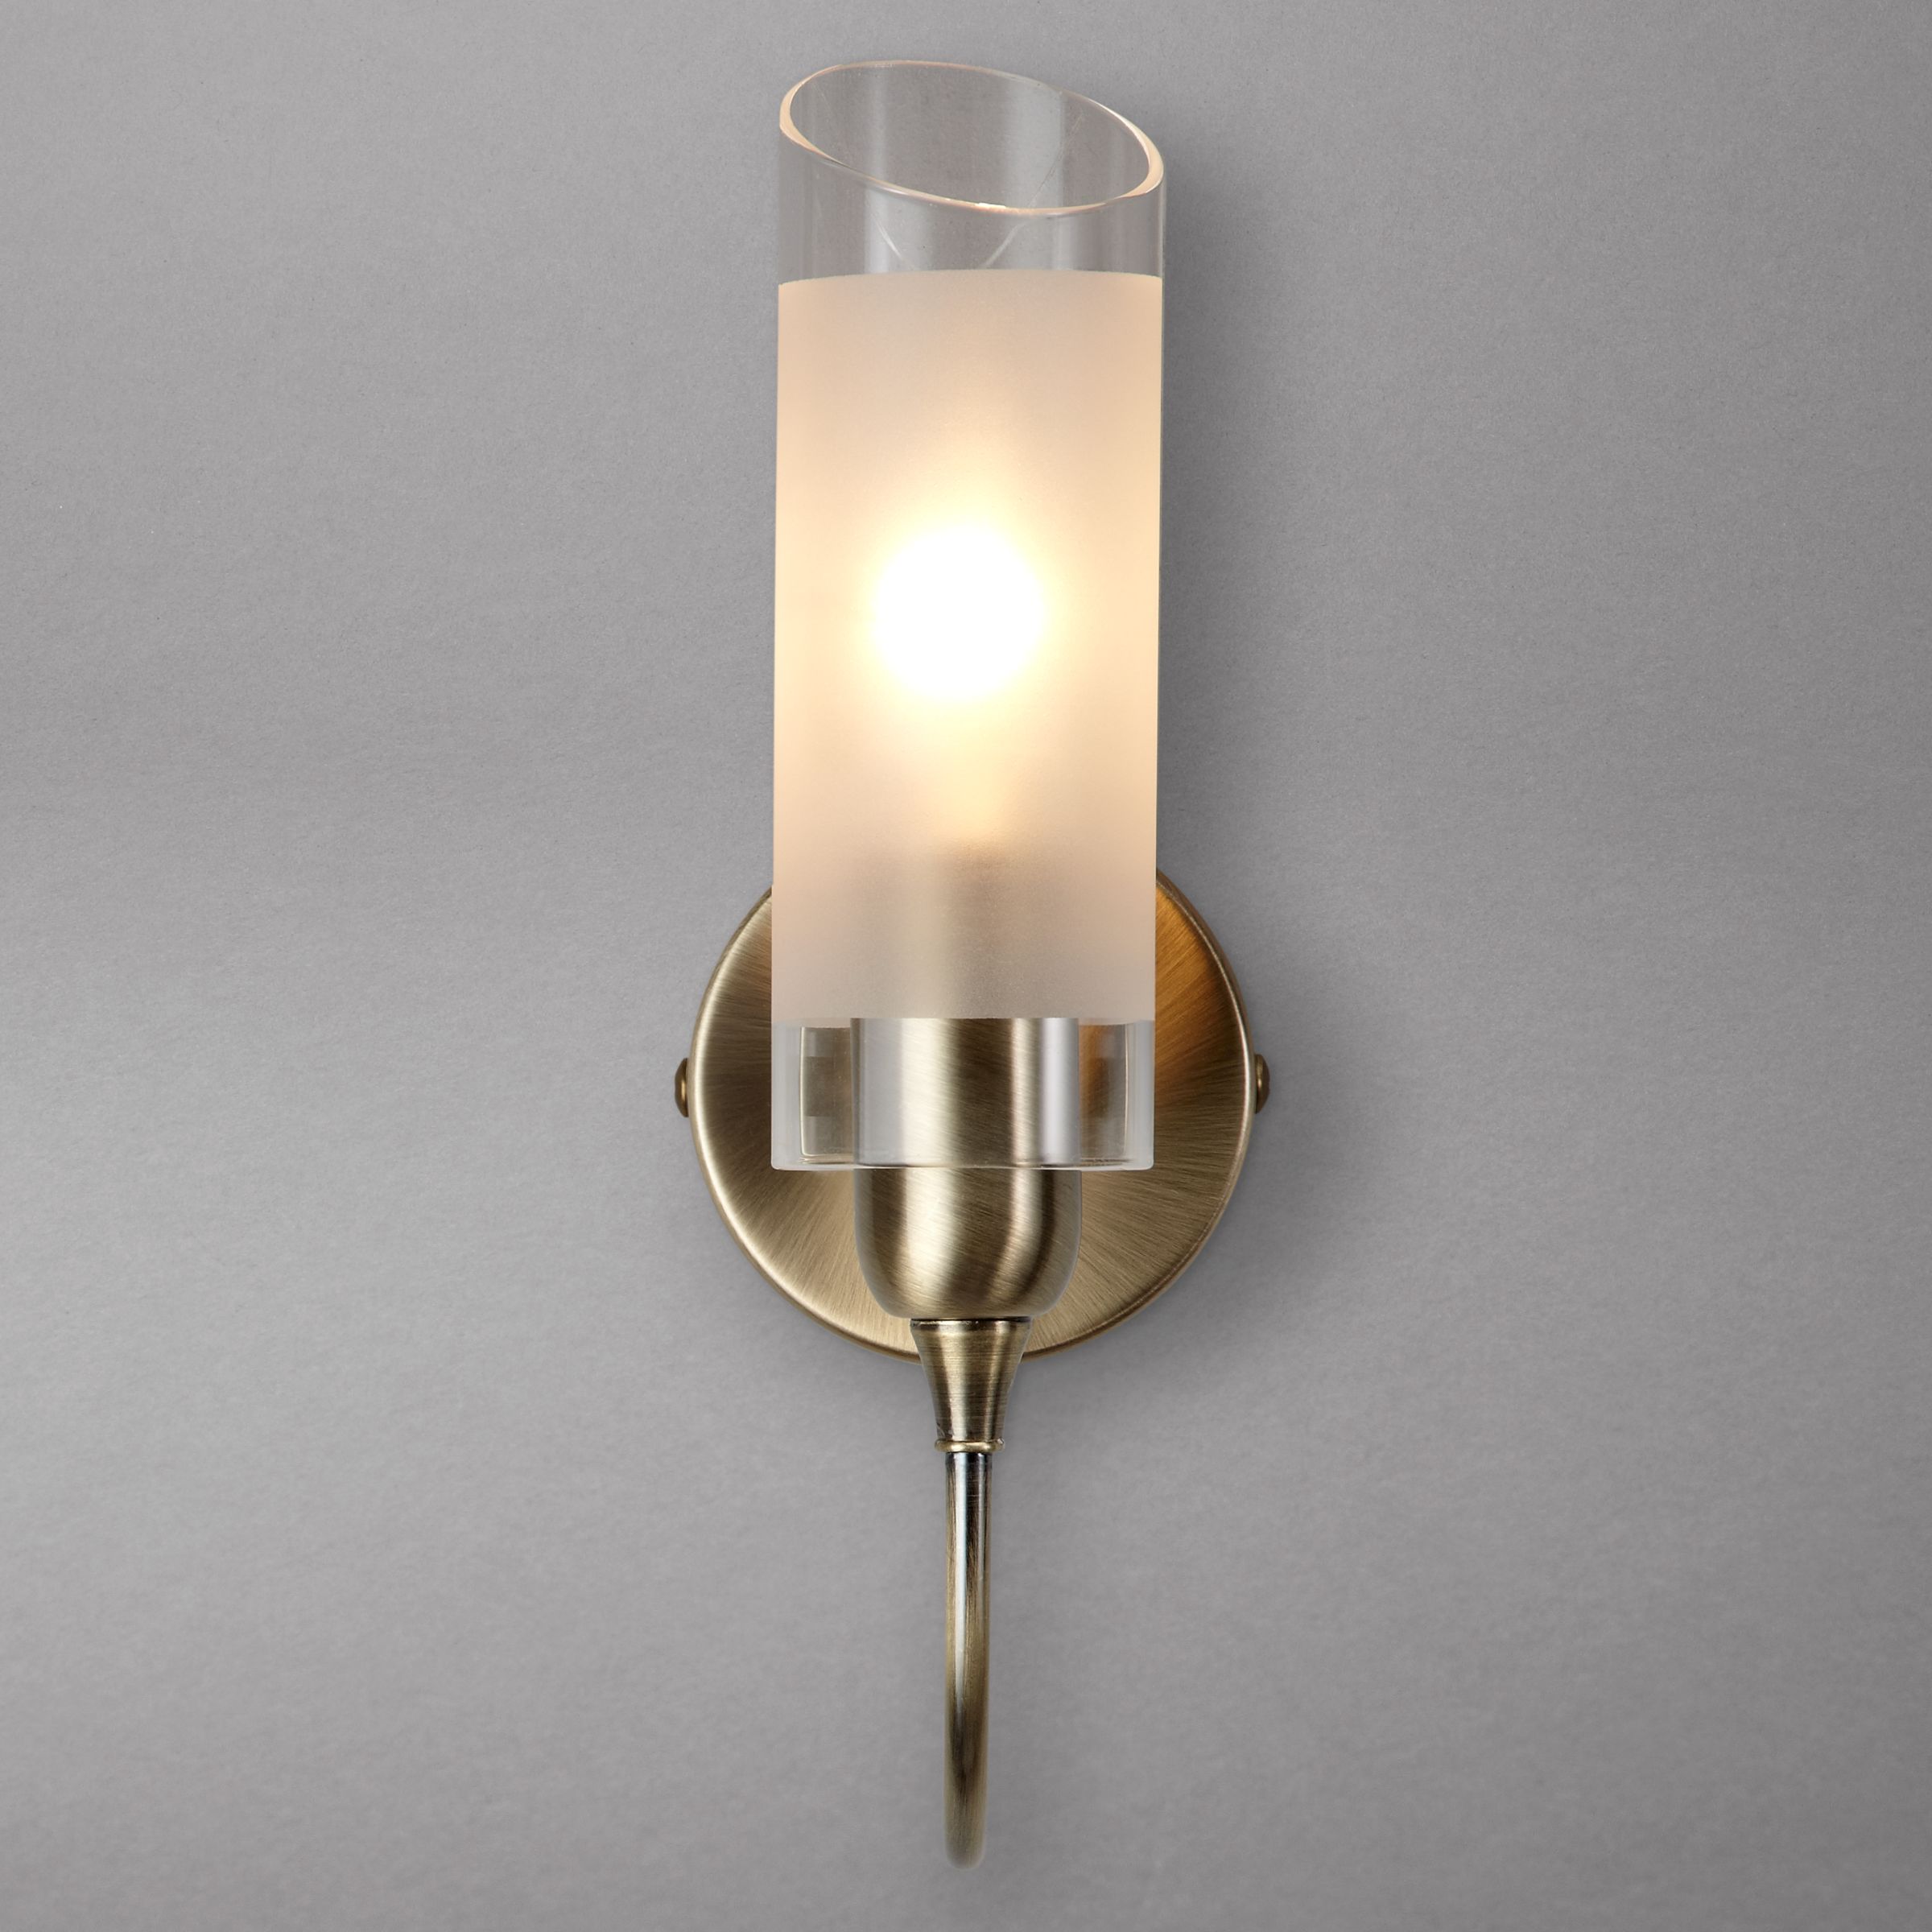 Limbo Wall Light, Antiqued Brass 148944